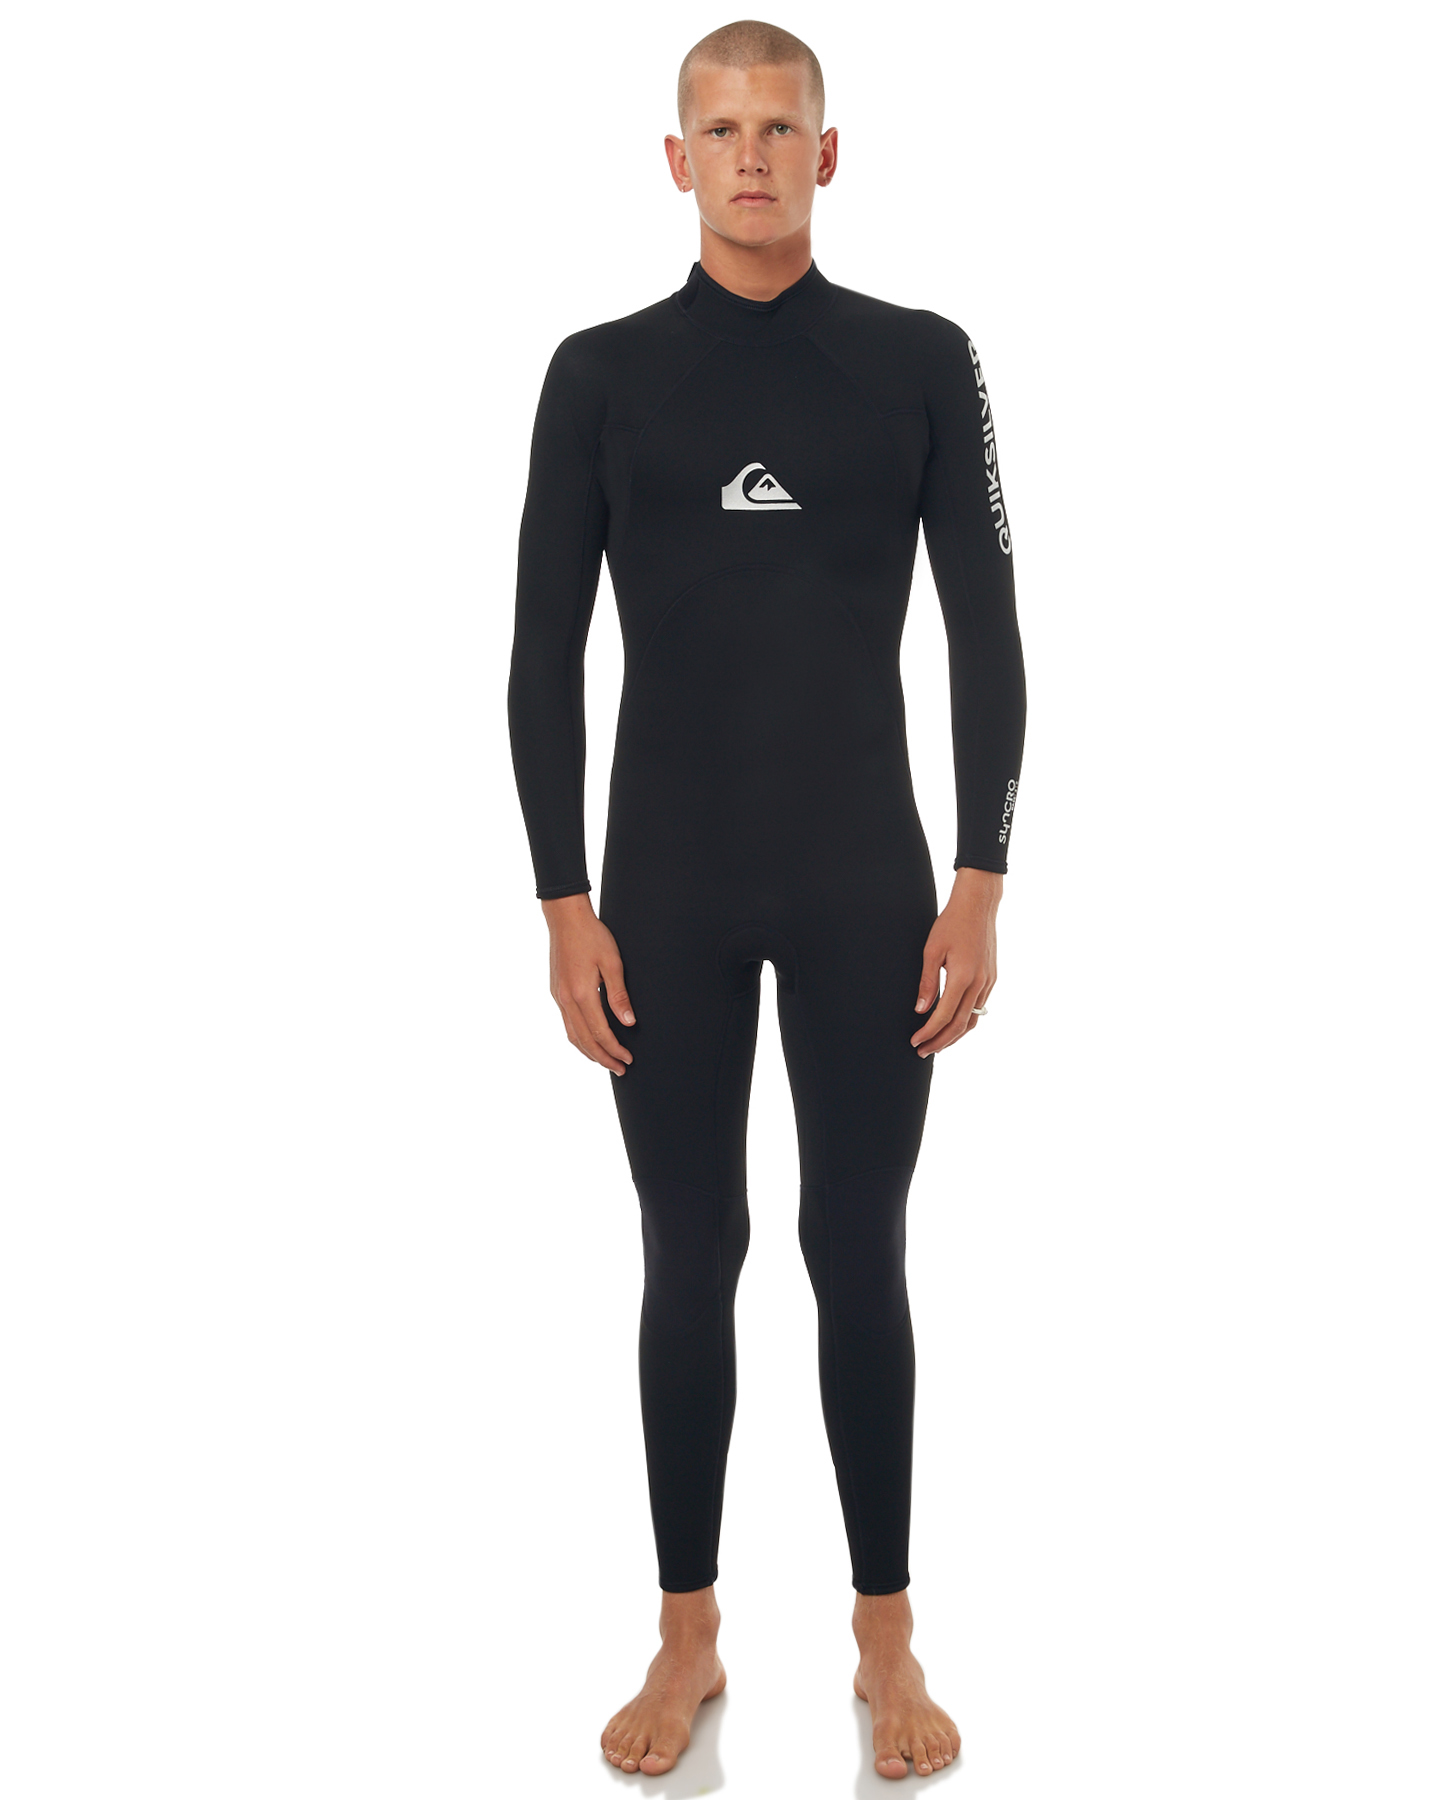 Sophie hoesten Aanleg Quiksilver Syncro 3X2 Base Full Steamer Wetsuit - Black | SurfStitch